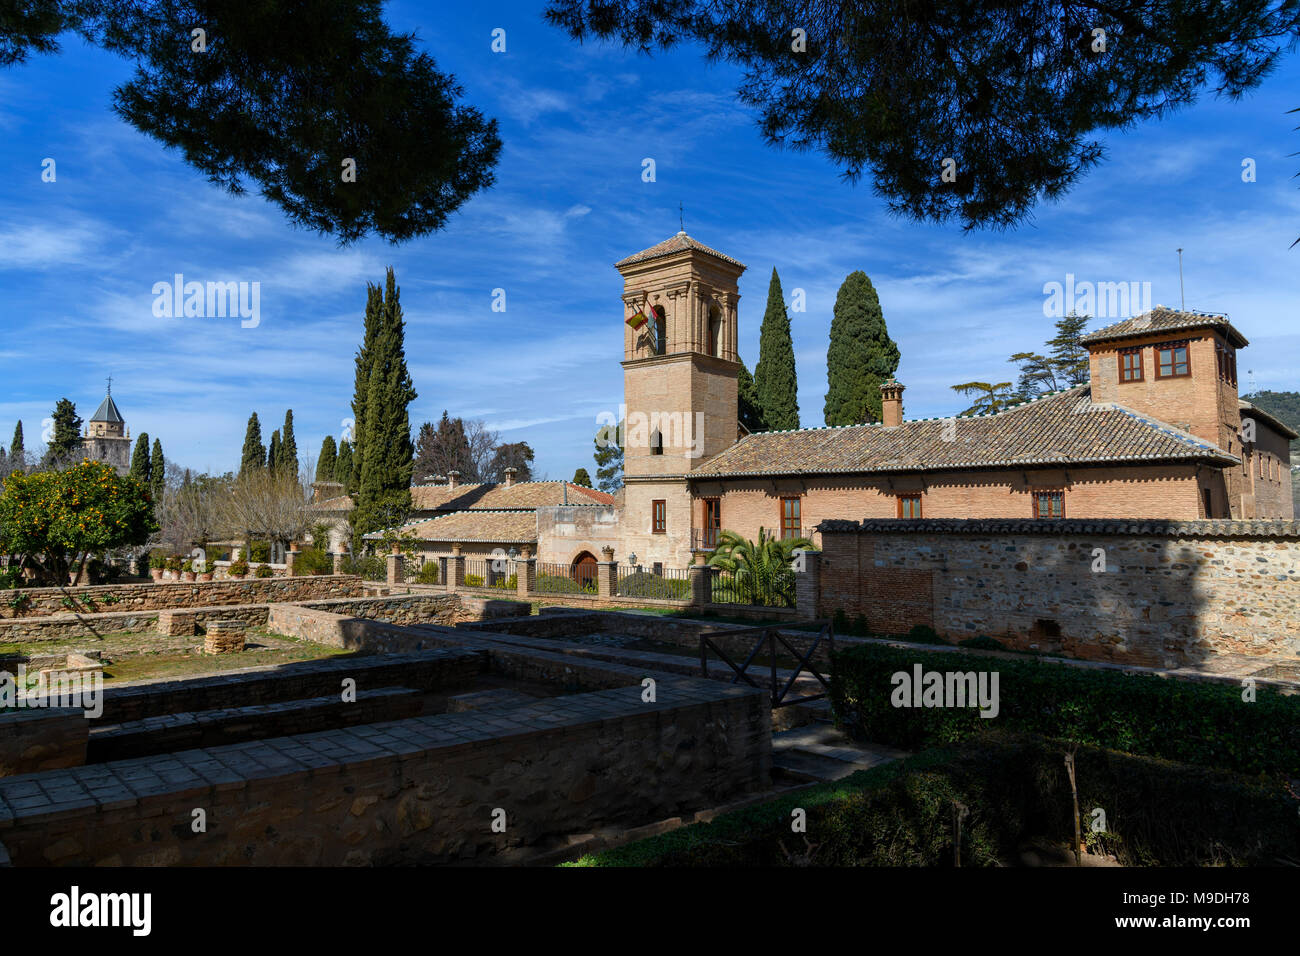 Convento de San Francisco (now a Parador Nacional) in La Alhambra, Granada, Andalusia, Spain Stock Photo